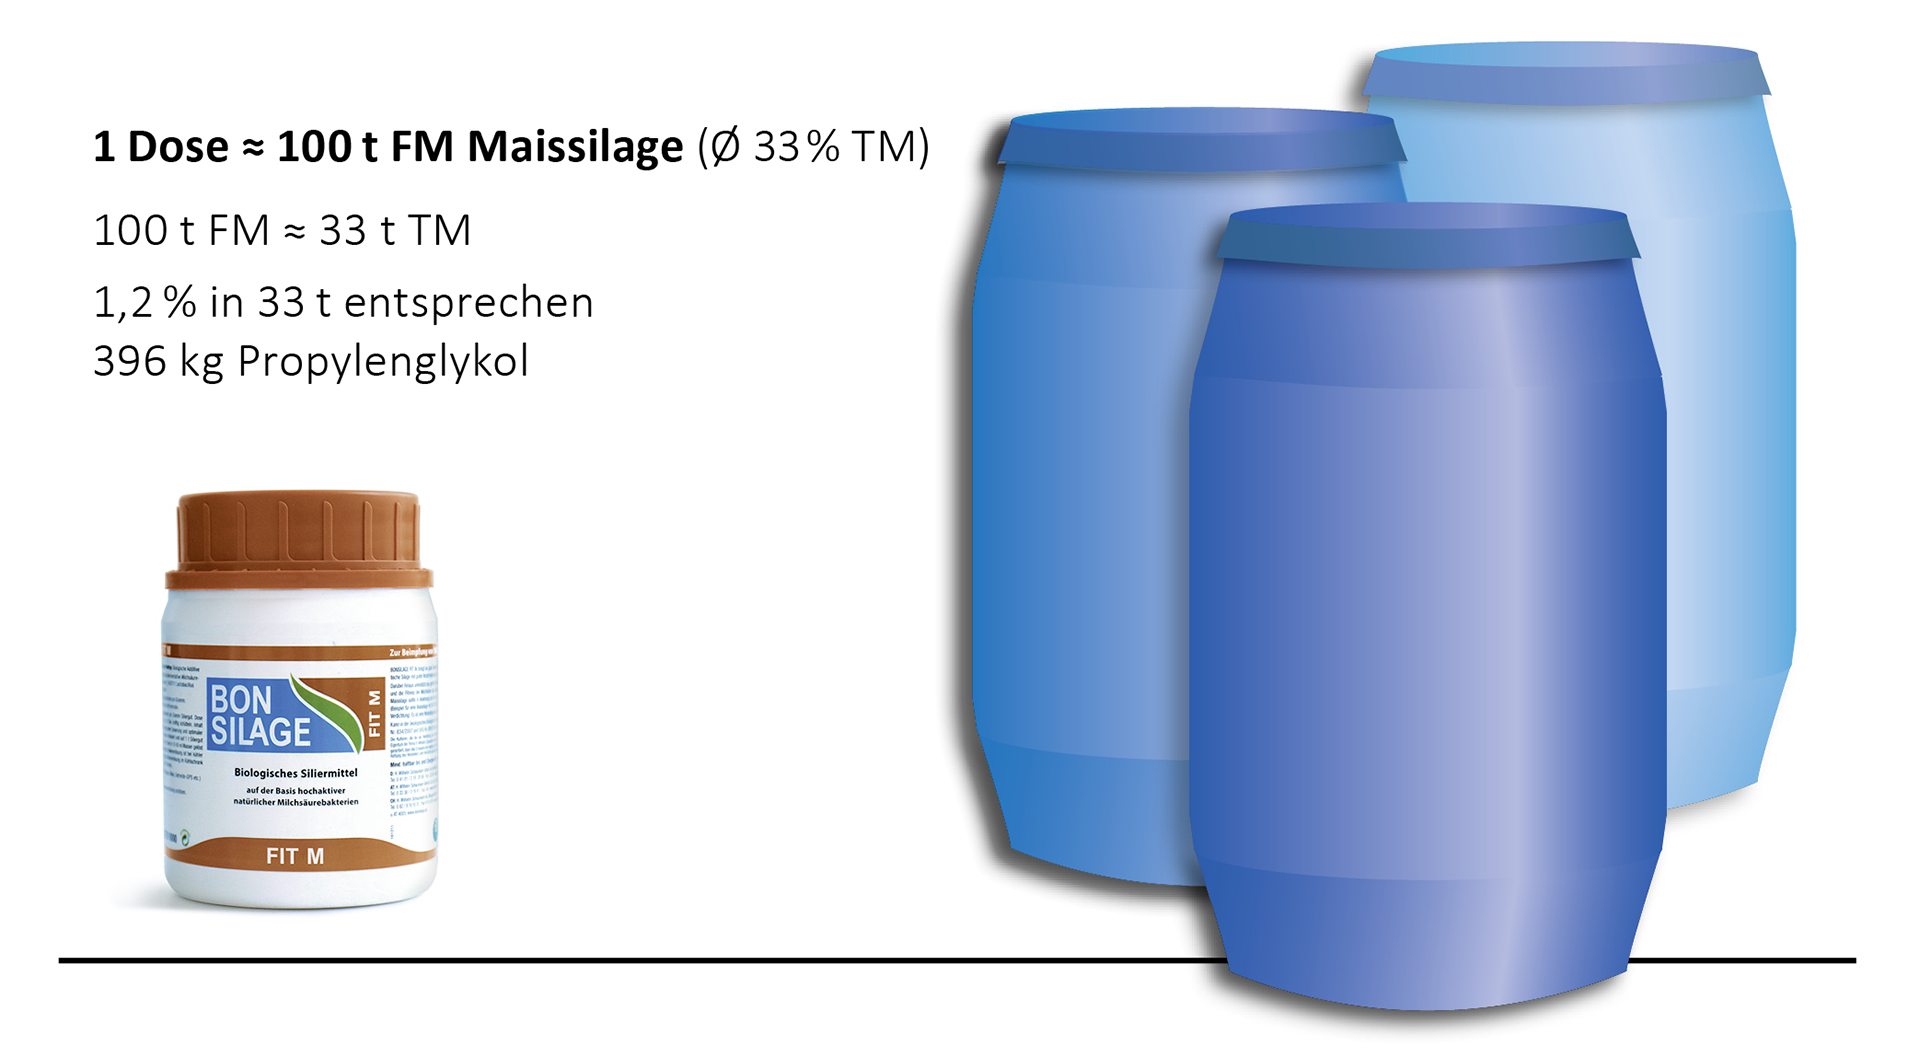 jedna bočica BONSILAGE FIT M proizvodi 396 kg propilenglikola